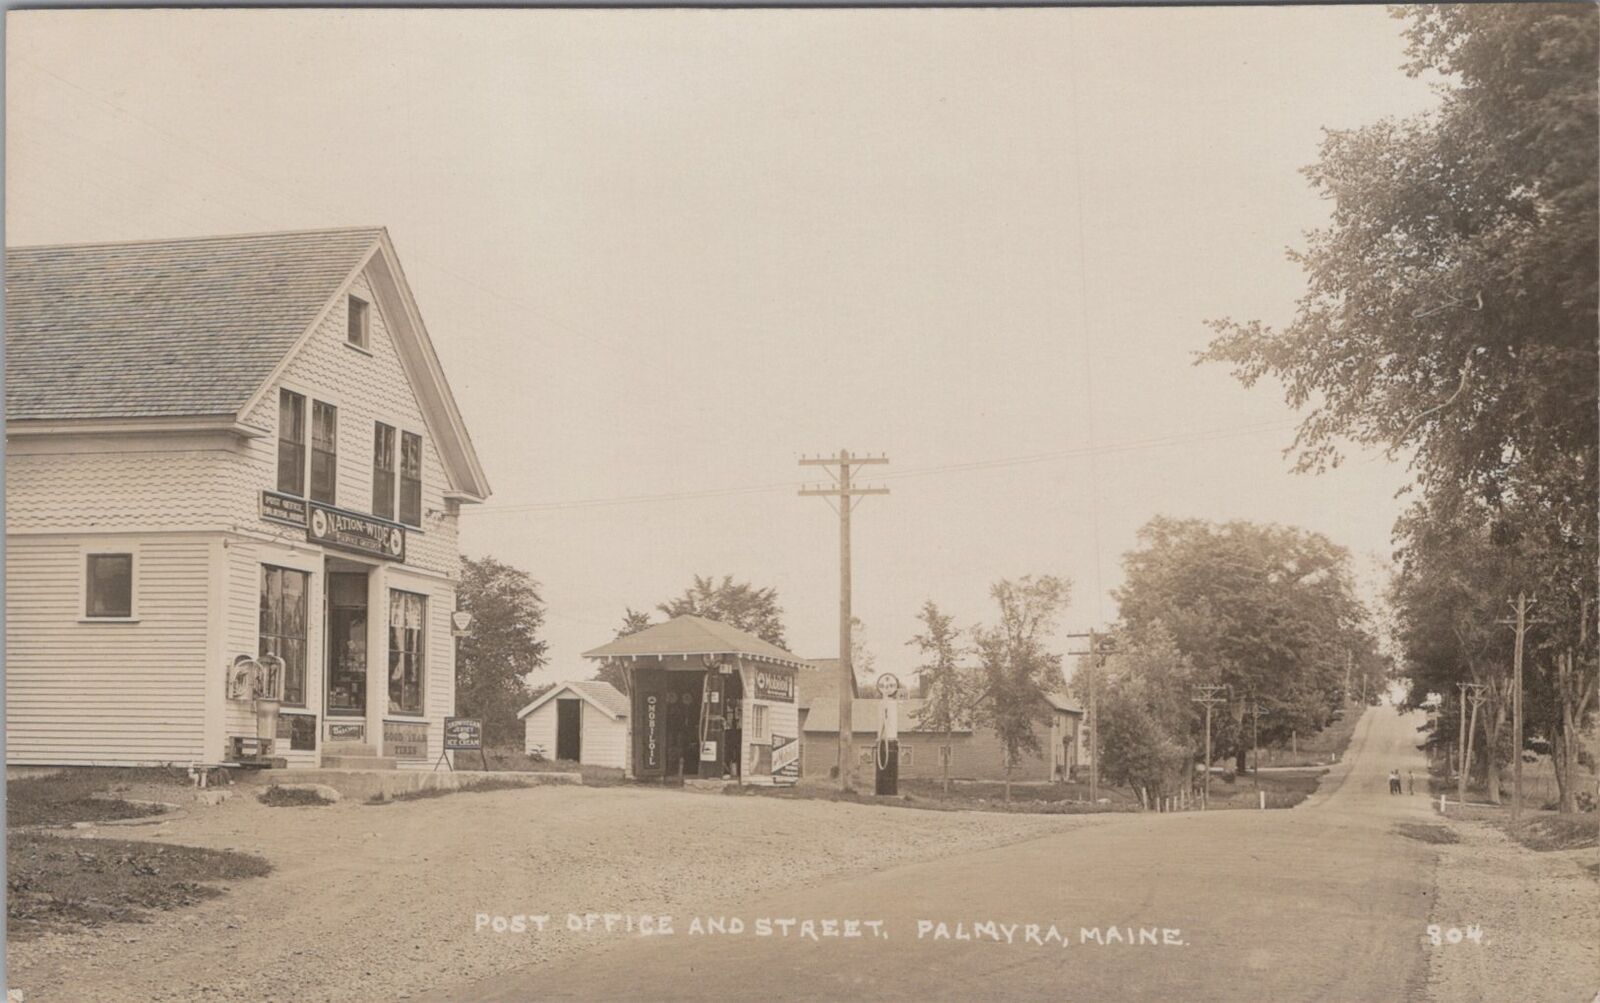 Post Office Street Gas Pum Good Year Tires Palmyra Maine RPPC c1900s Postcard